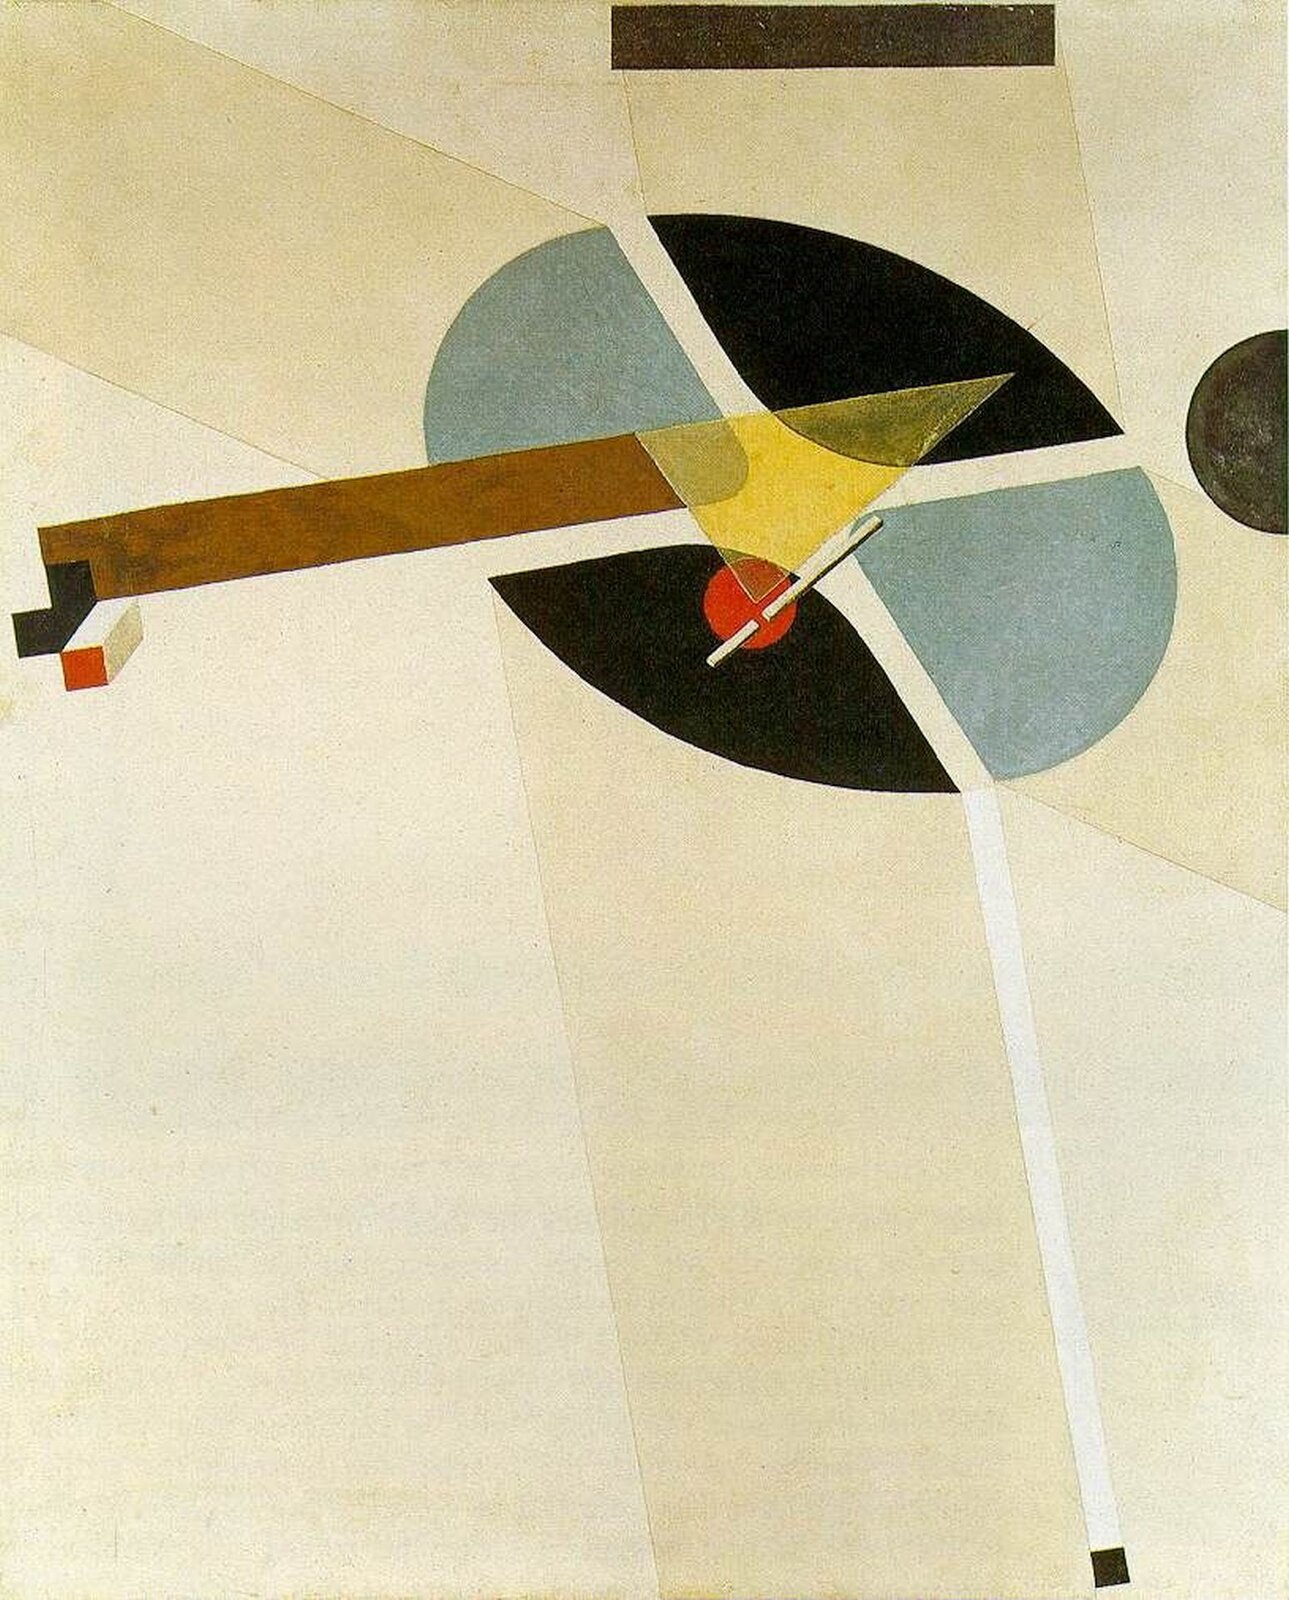 El Lissitzky, „proun G7”, 1923, Kunstsammlung Nordrhein-Westfalen, Düsseldorf, Niemcy, pinimg.com, CC BY 3.0